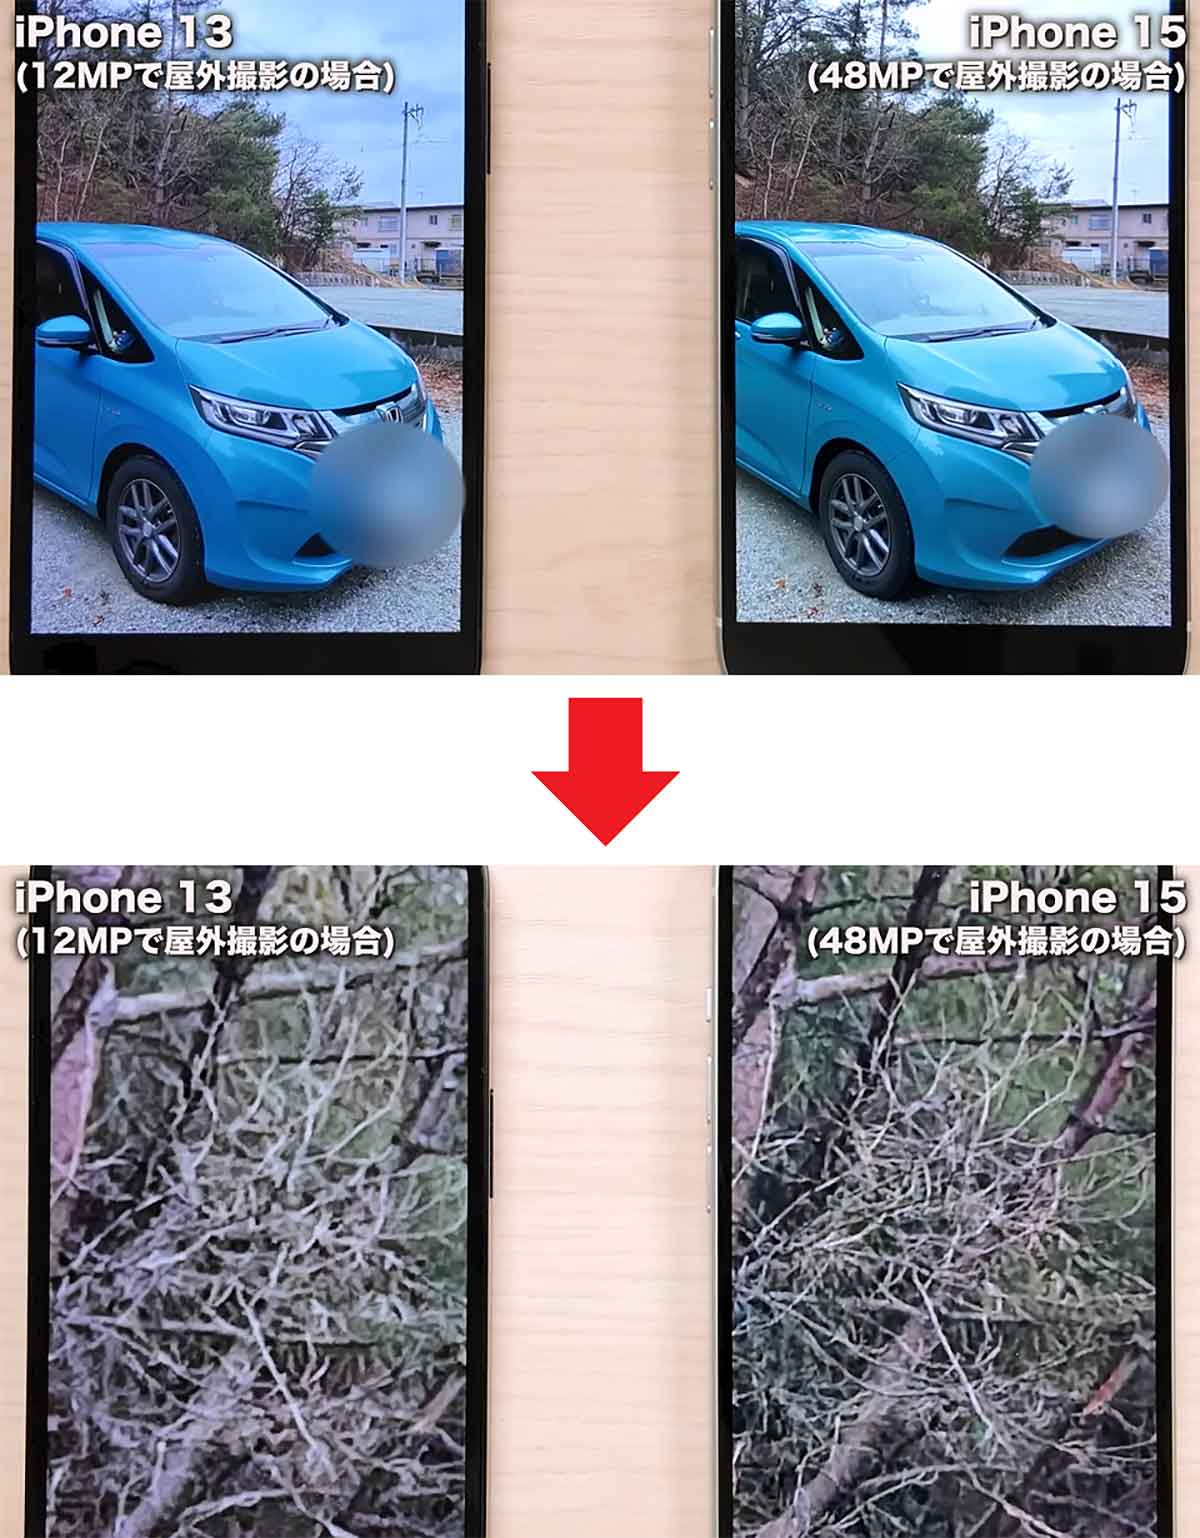 iPhone 13とiPhone 15のカメラ性能はどう違う？2